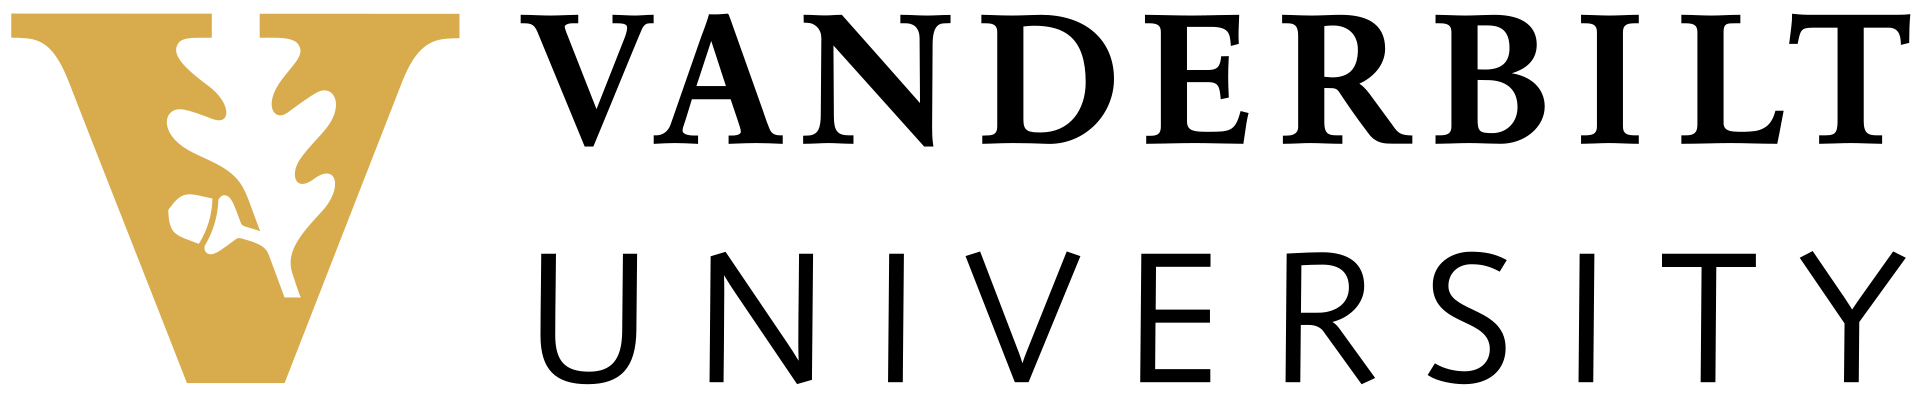 范德比尔特大学 logo, By Source, Fair use, http://en.维基百科.org/w/index.php?curid = 13301785 "